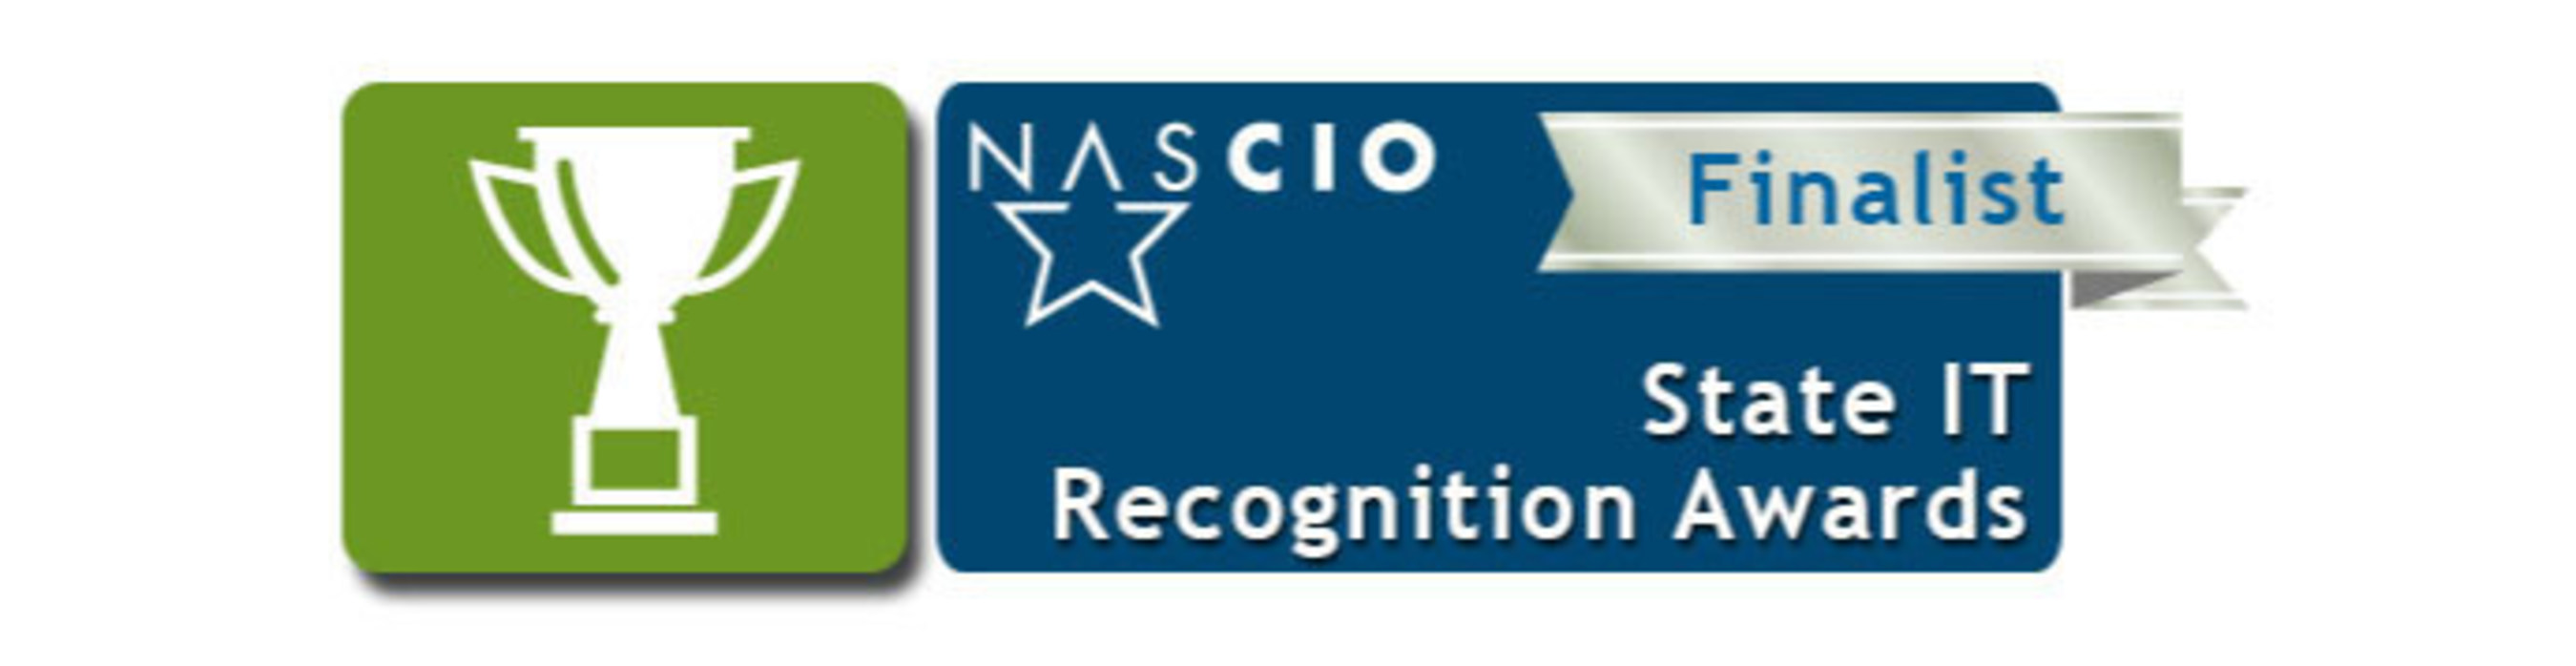 NASCIO_State_IT_Finalist